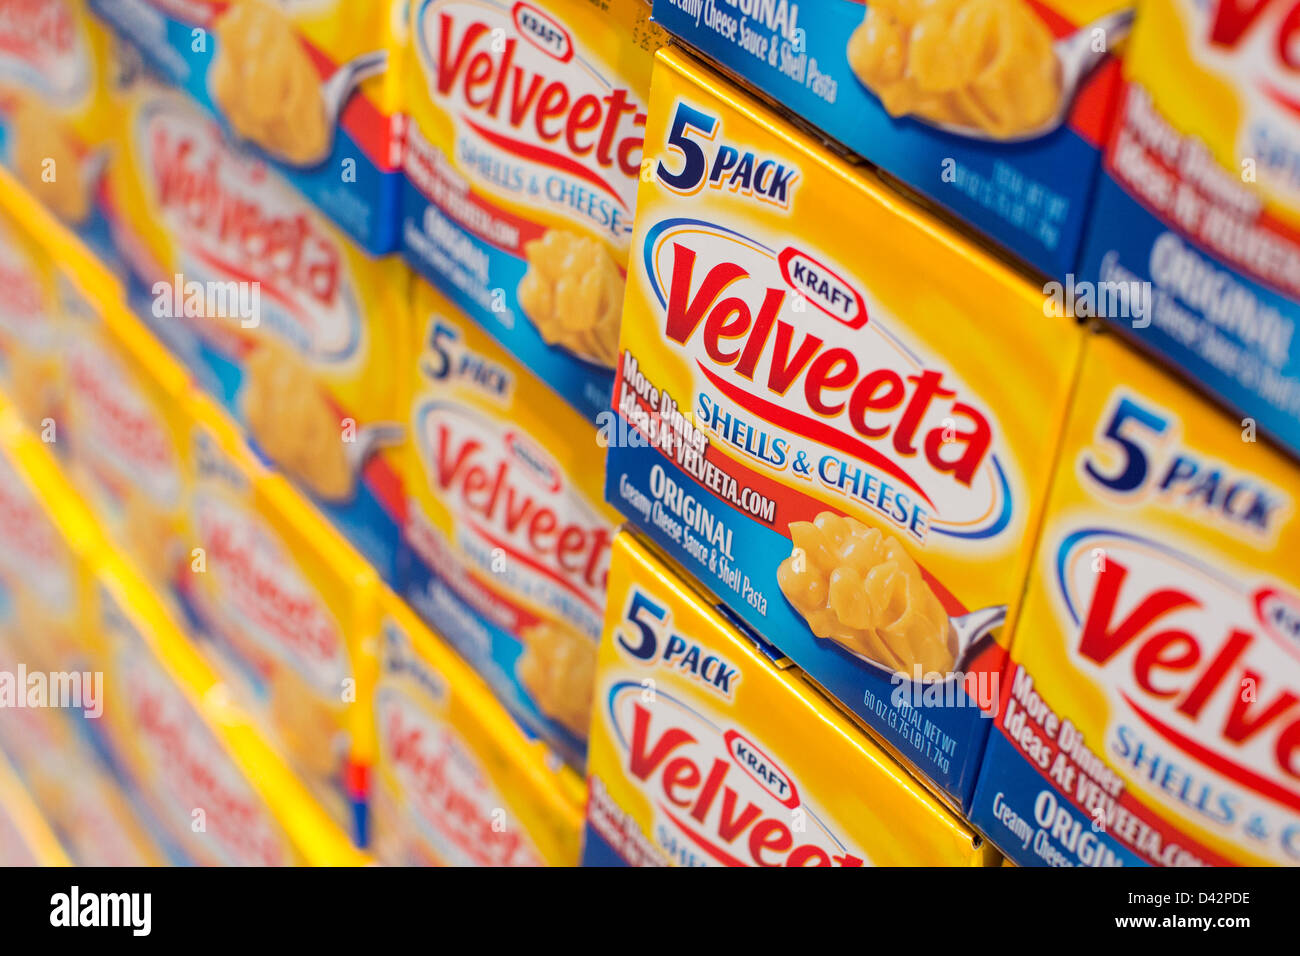 Kraft Velveeta shells and cheese on display at a Costco Wholesale Warehouse Club. Stock Photo